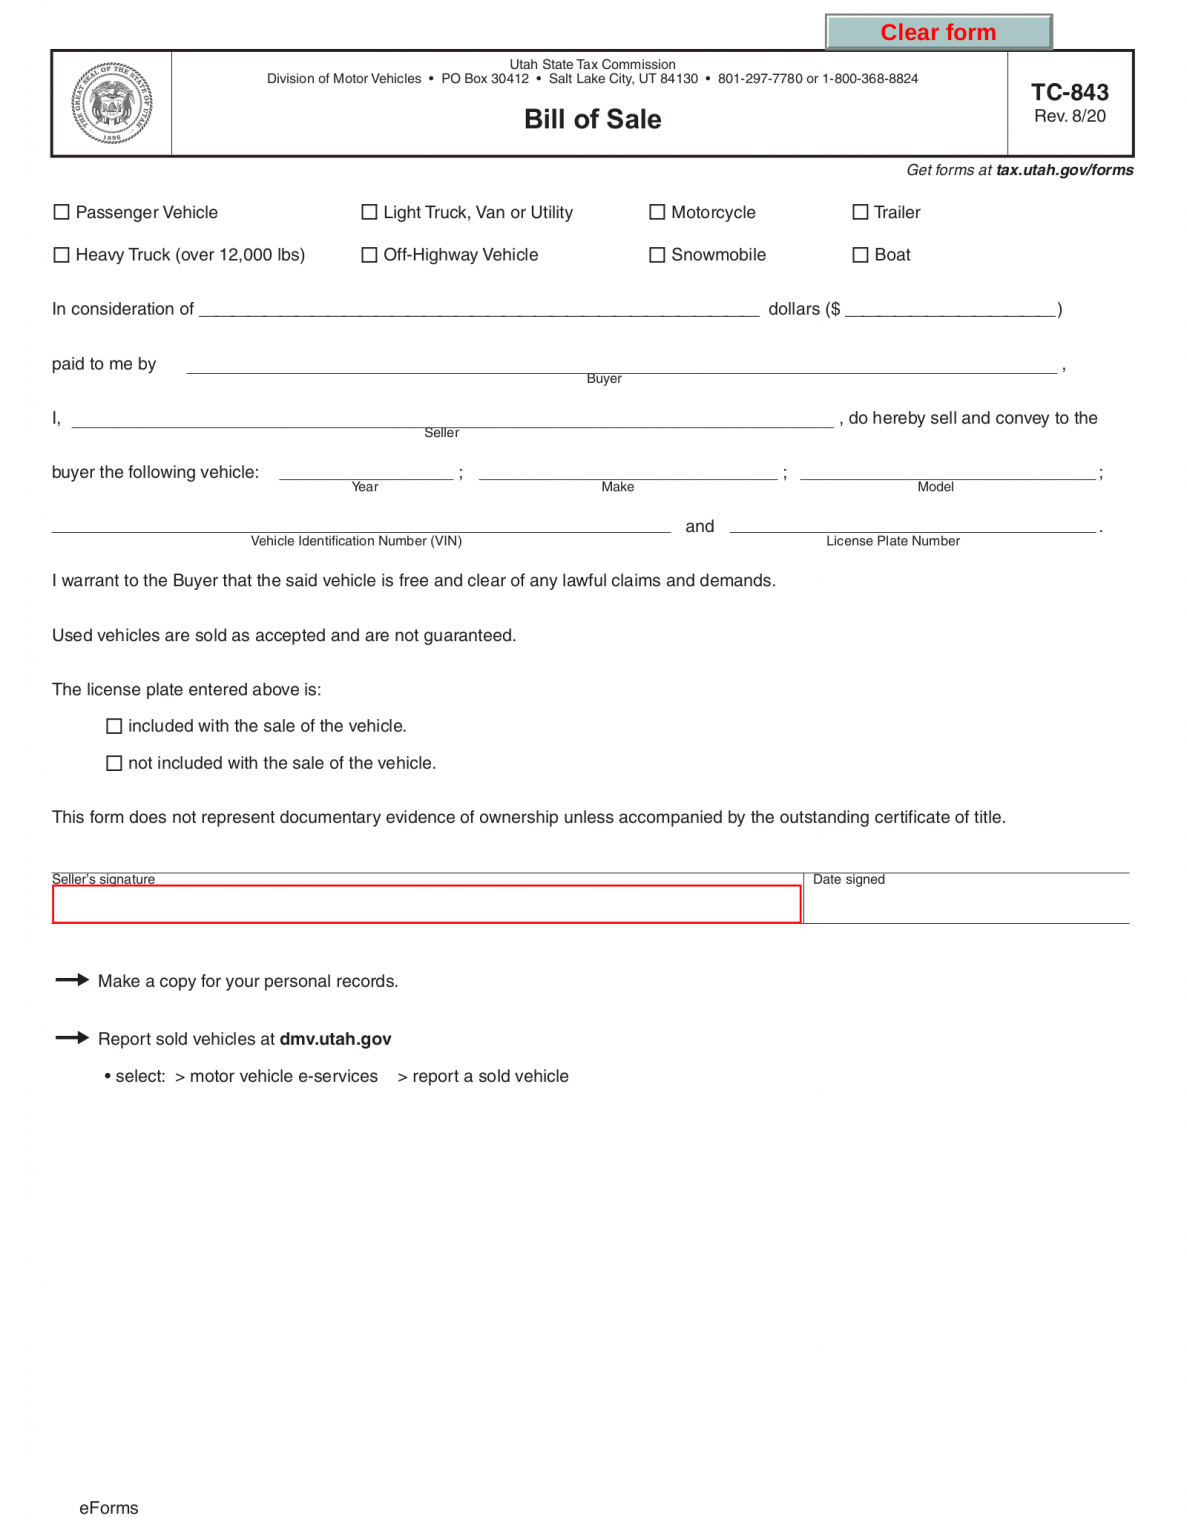 Free Utah Motor Vehicle Bill of Sale | Form TC-843 - PDF – eForms